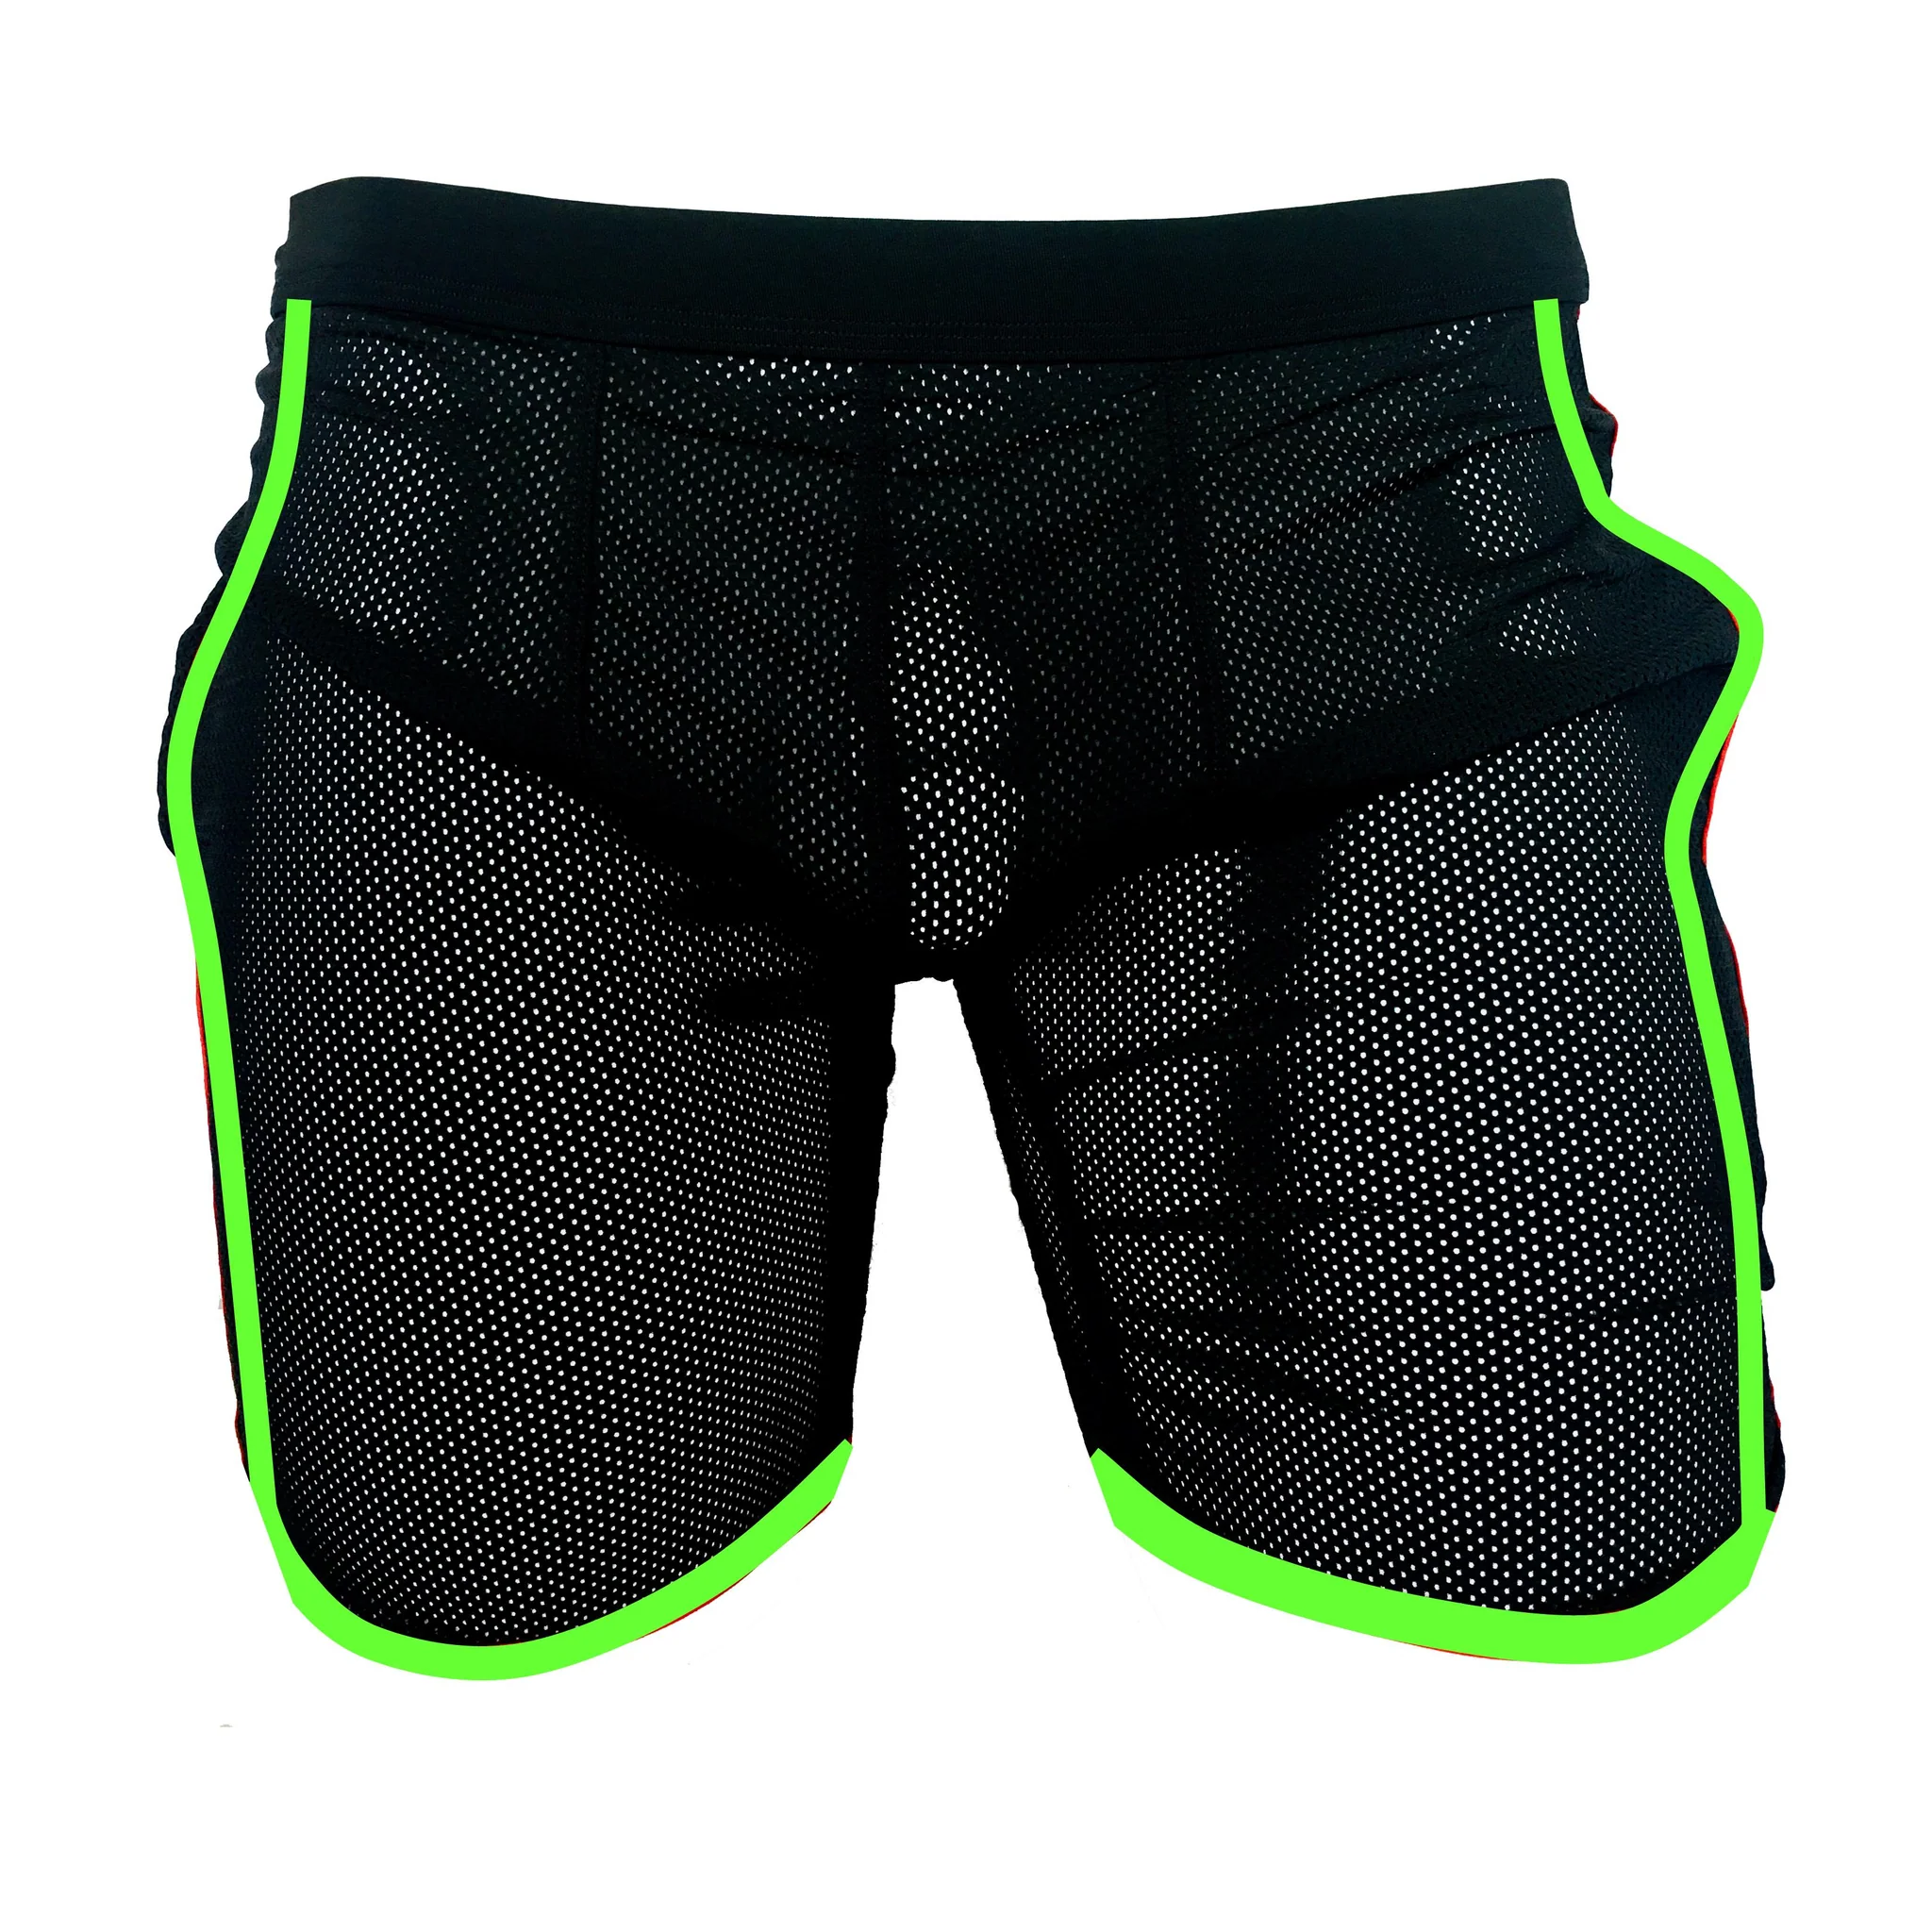 Knobs Mesh Gym Shorts Pocket - Black/Green